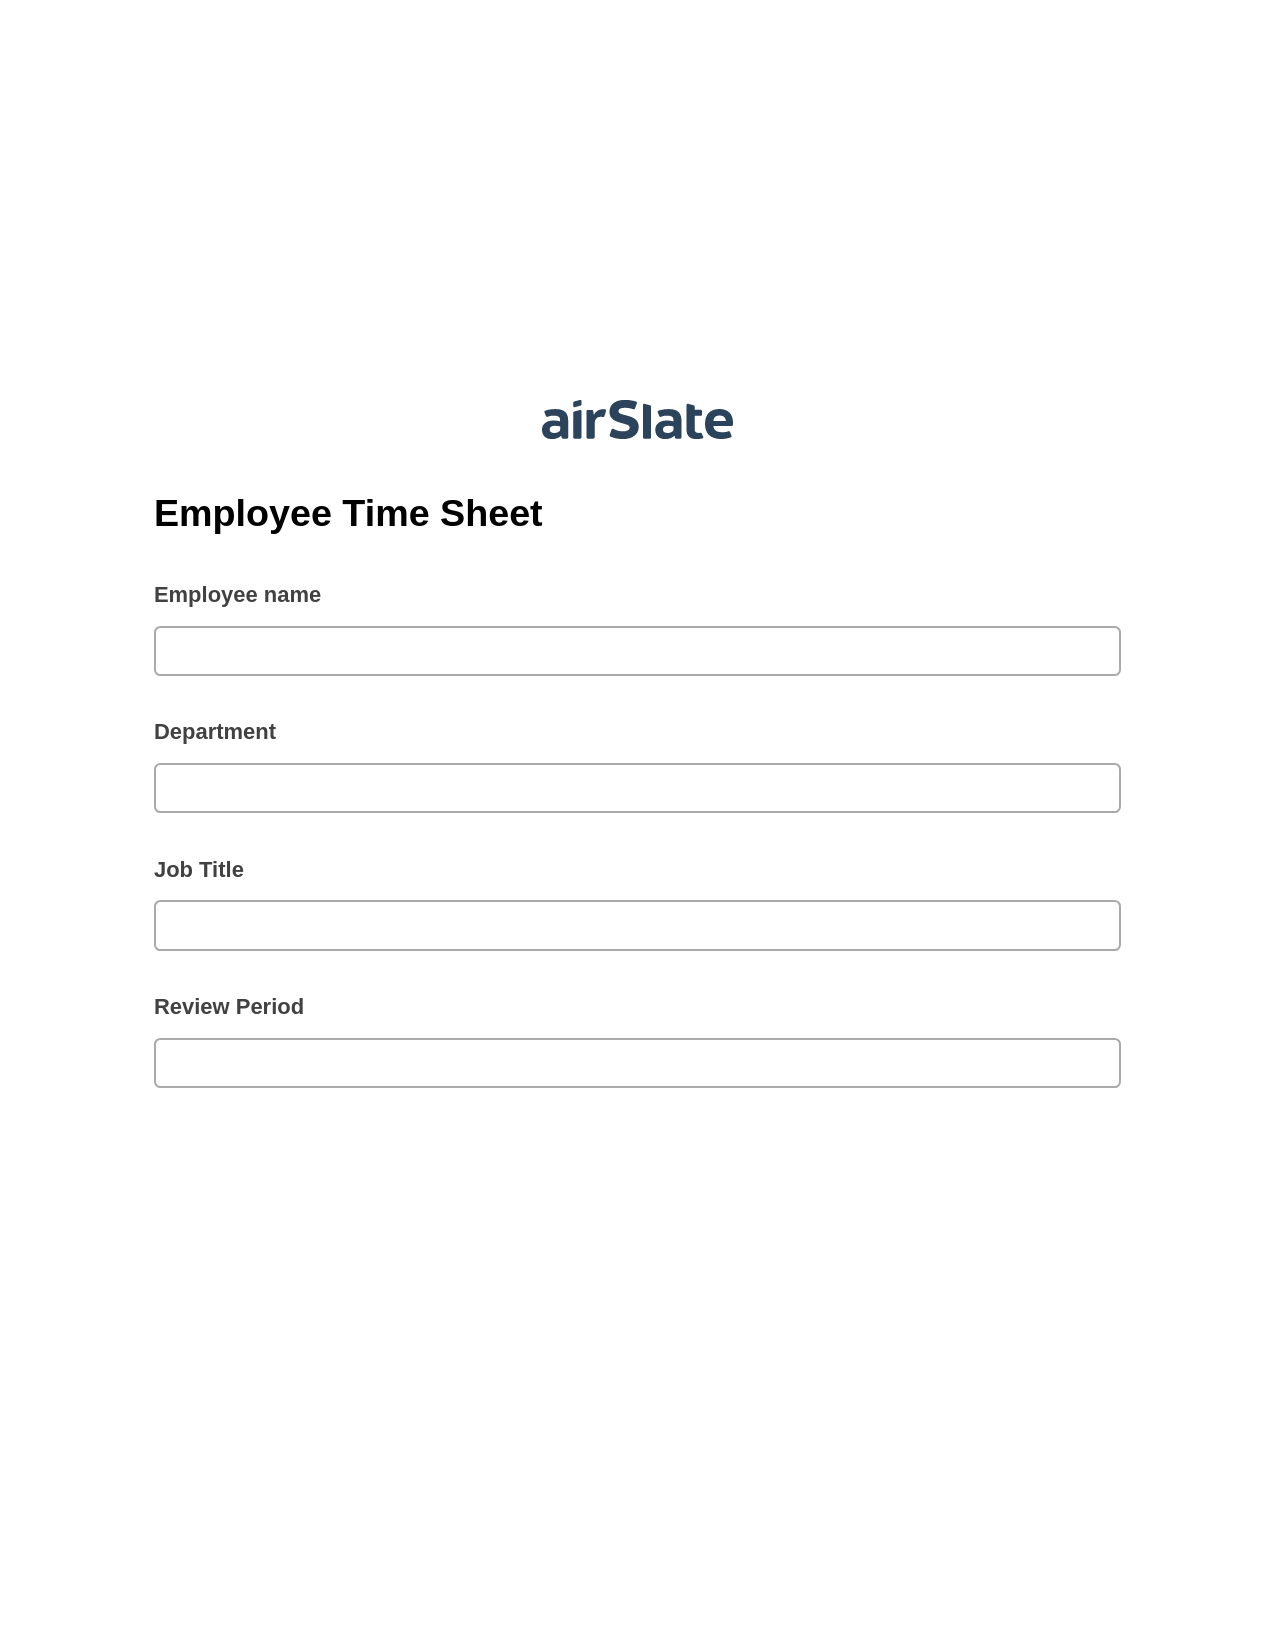 Employee Time Sheet Pre-fill Document Bot, Update Audit Trail Bot, Webhook Postfinish Bot